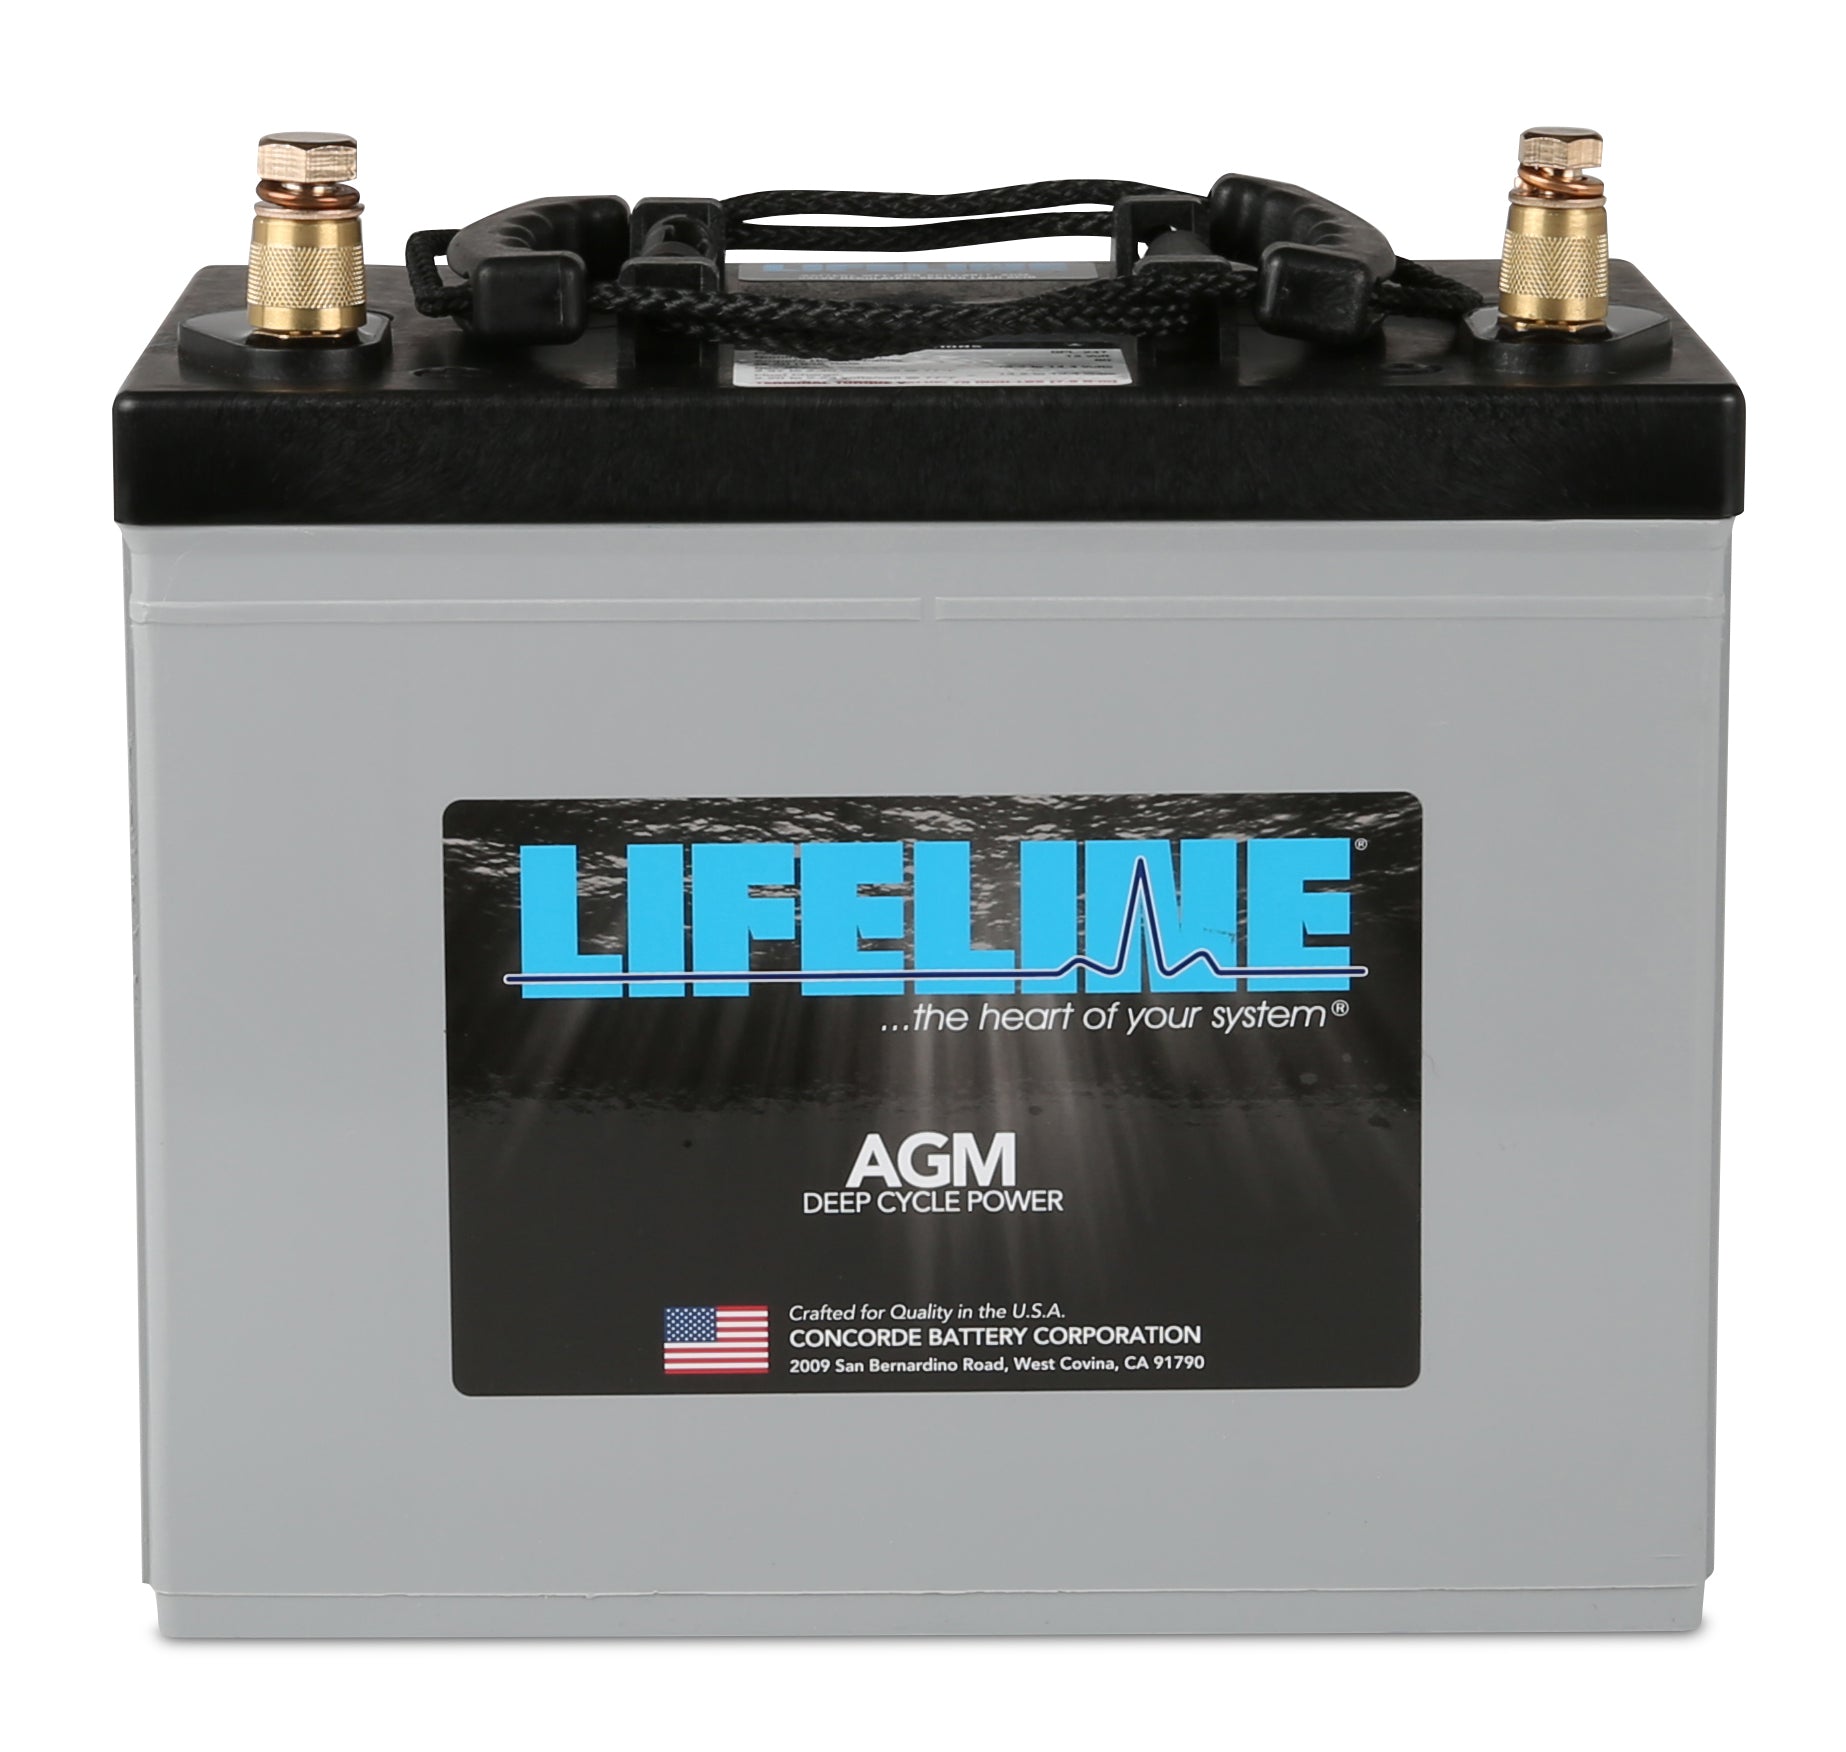 Lifeline GPL-24T - 12V - 80Ah Deep Cycle Battery